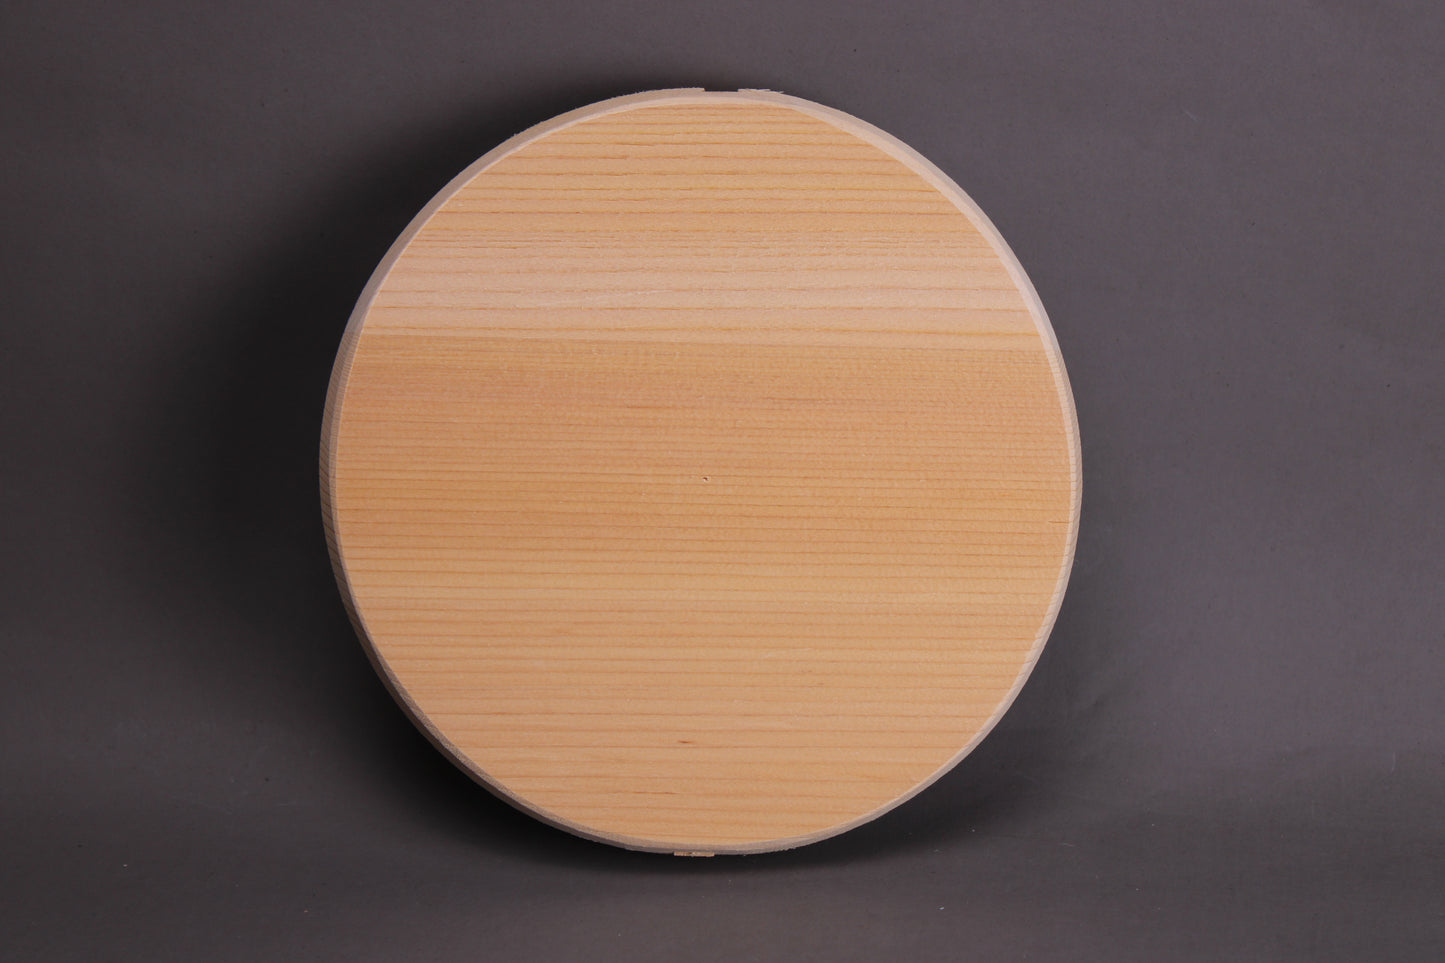  kiso hinoki drop lid with hiragana kiya 18cm shown with grey background backside